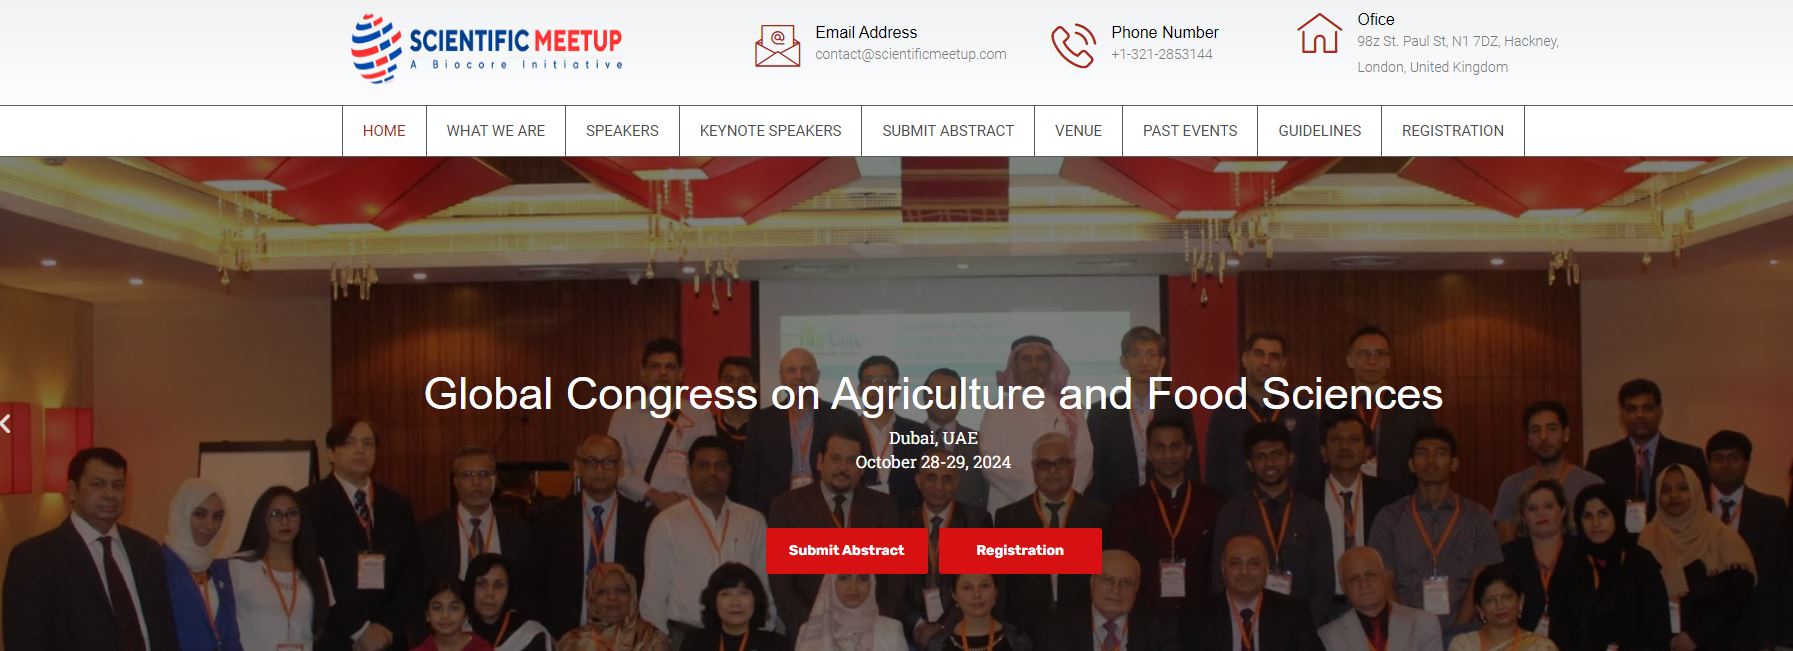 Global Congress on Agriculture and Food Sciences during October 28-29,2024 in Dubai, UAE., Dubai, United Arab Emirates